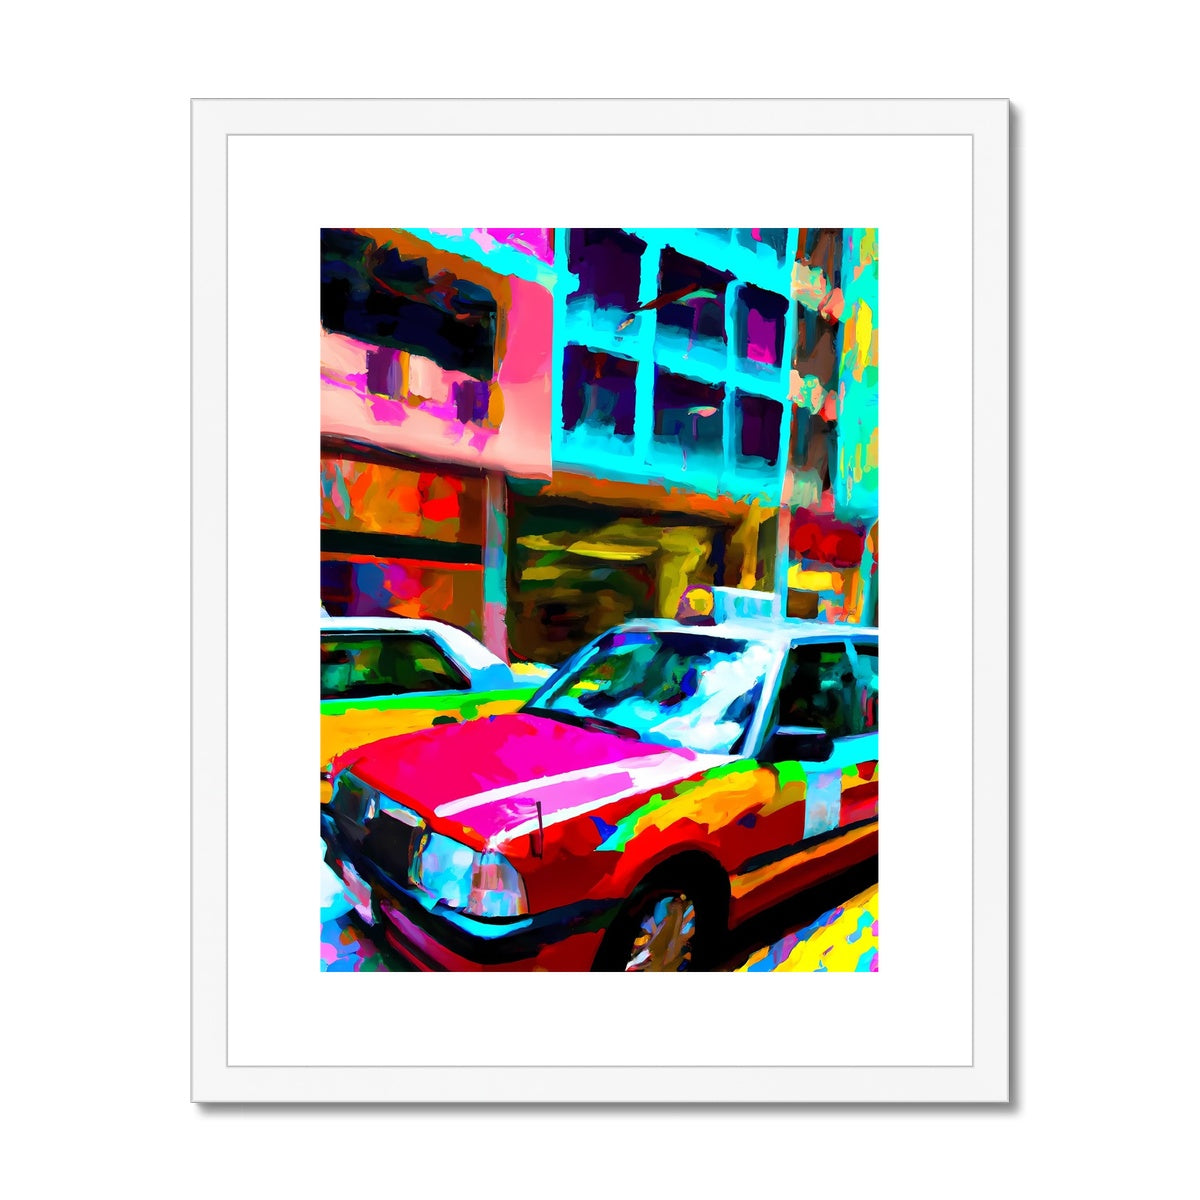 Hong Kong Impressions - Taxi Framed & Mounted Print